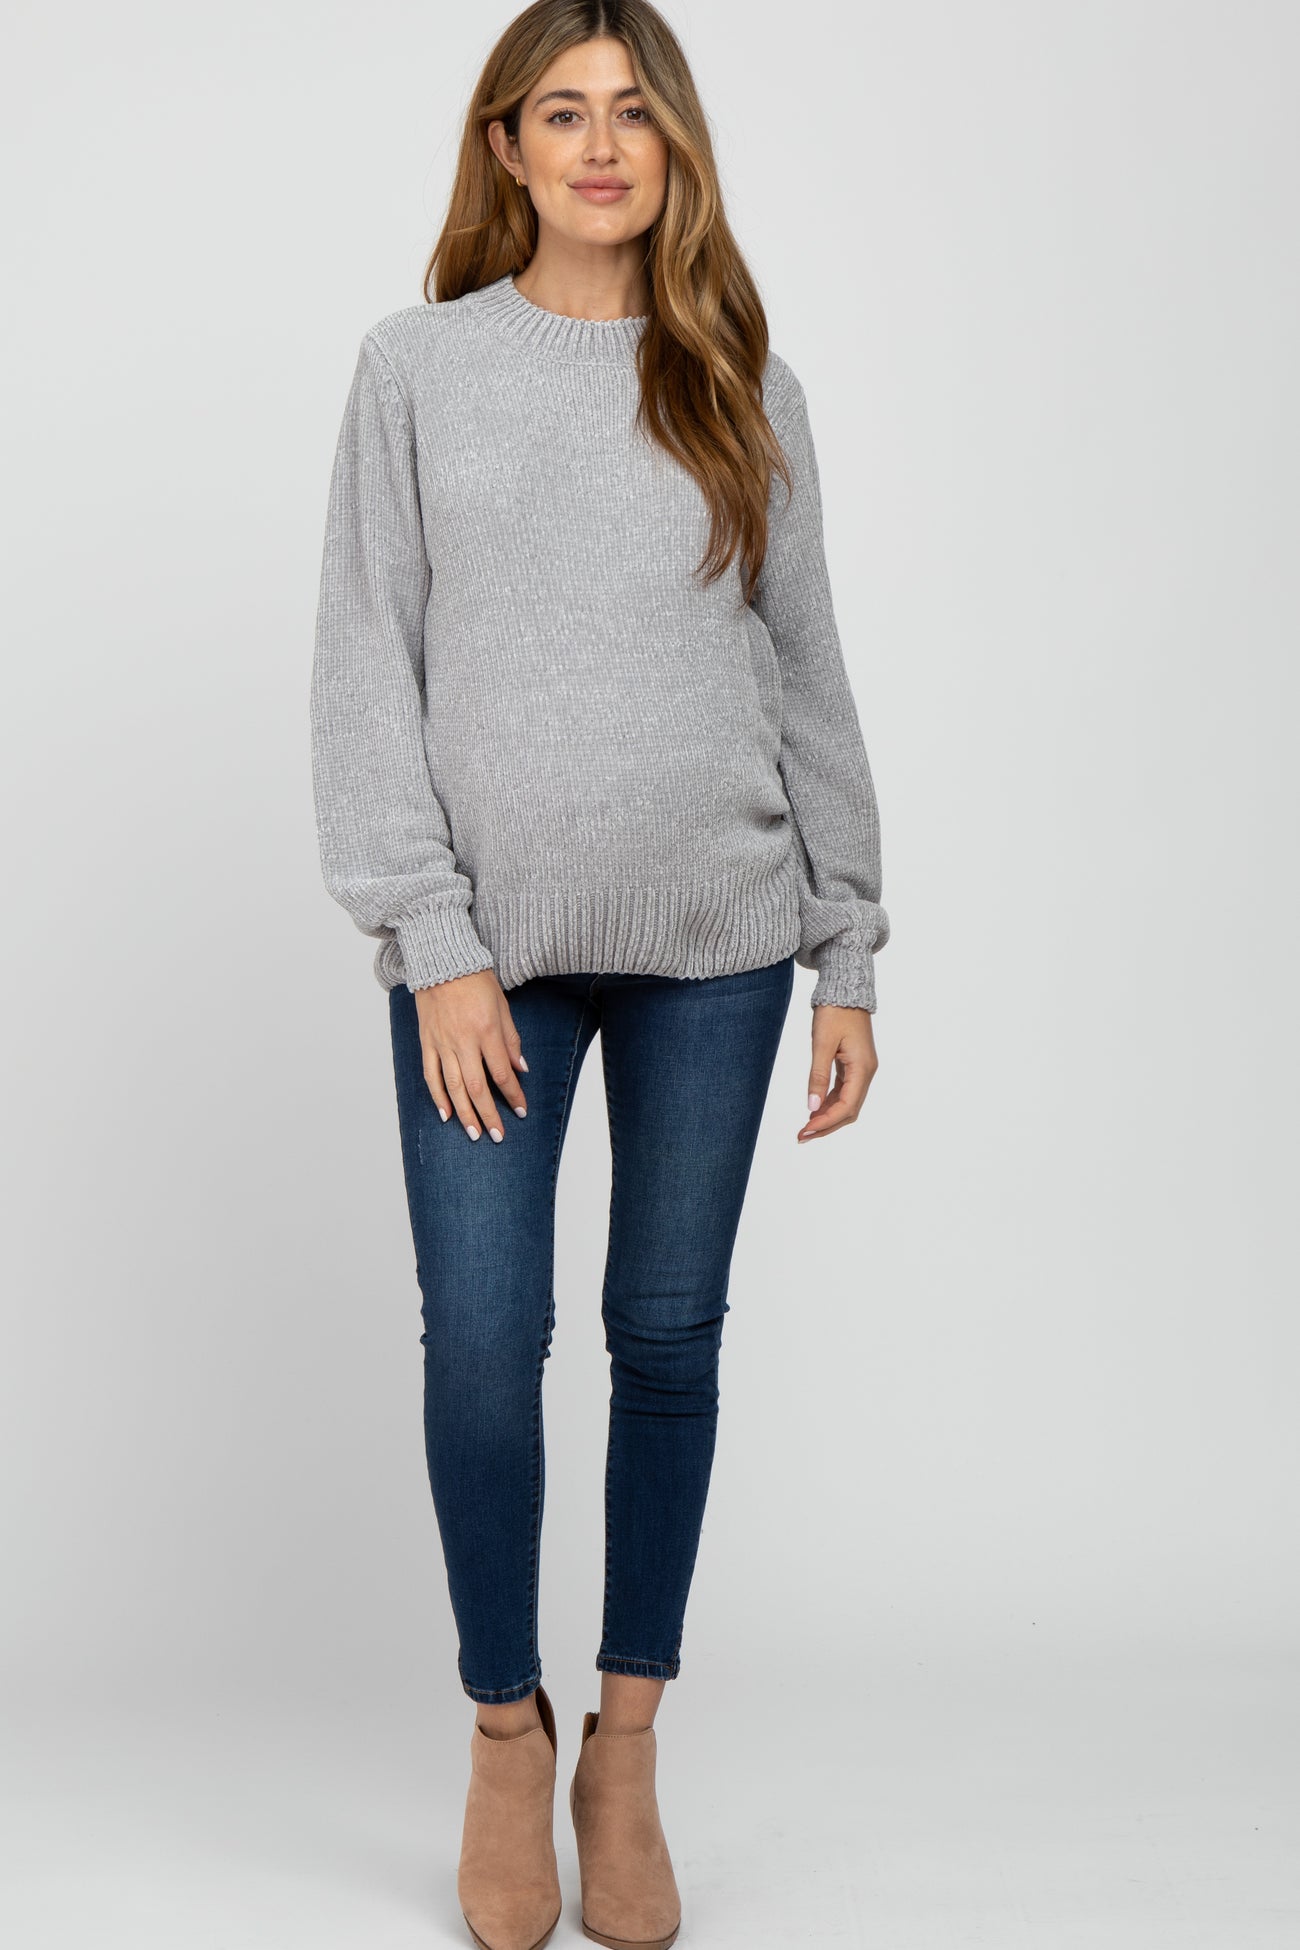 Heather Grey Chenille Knit Maternity Sweater – PinkBlush